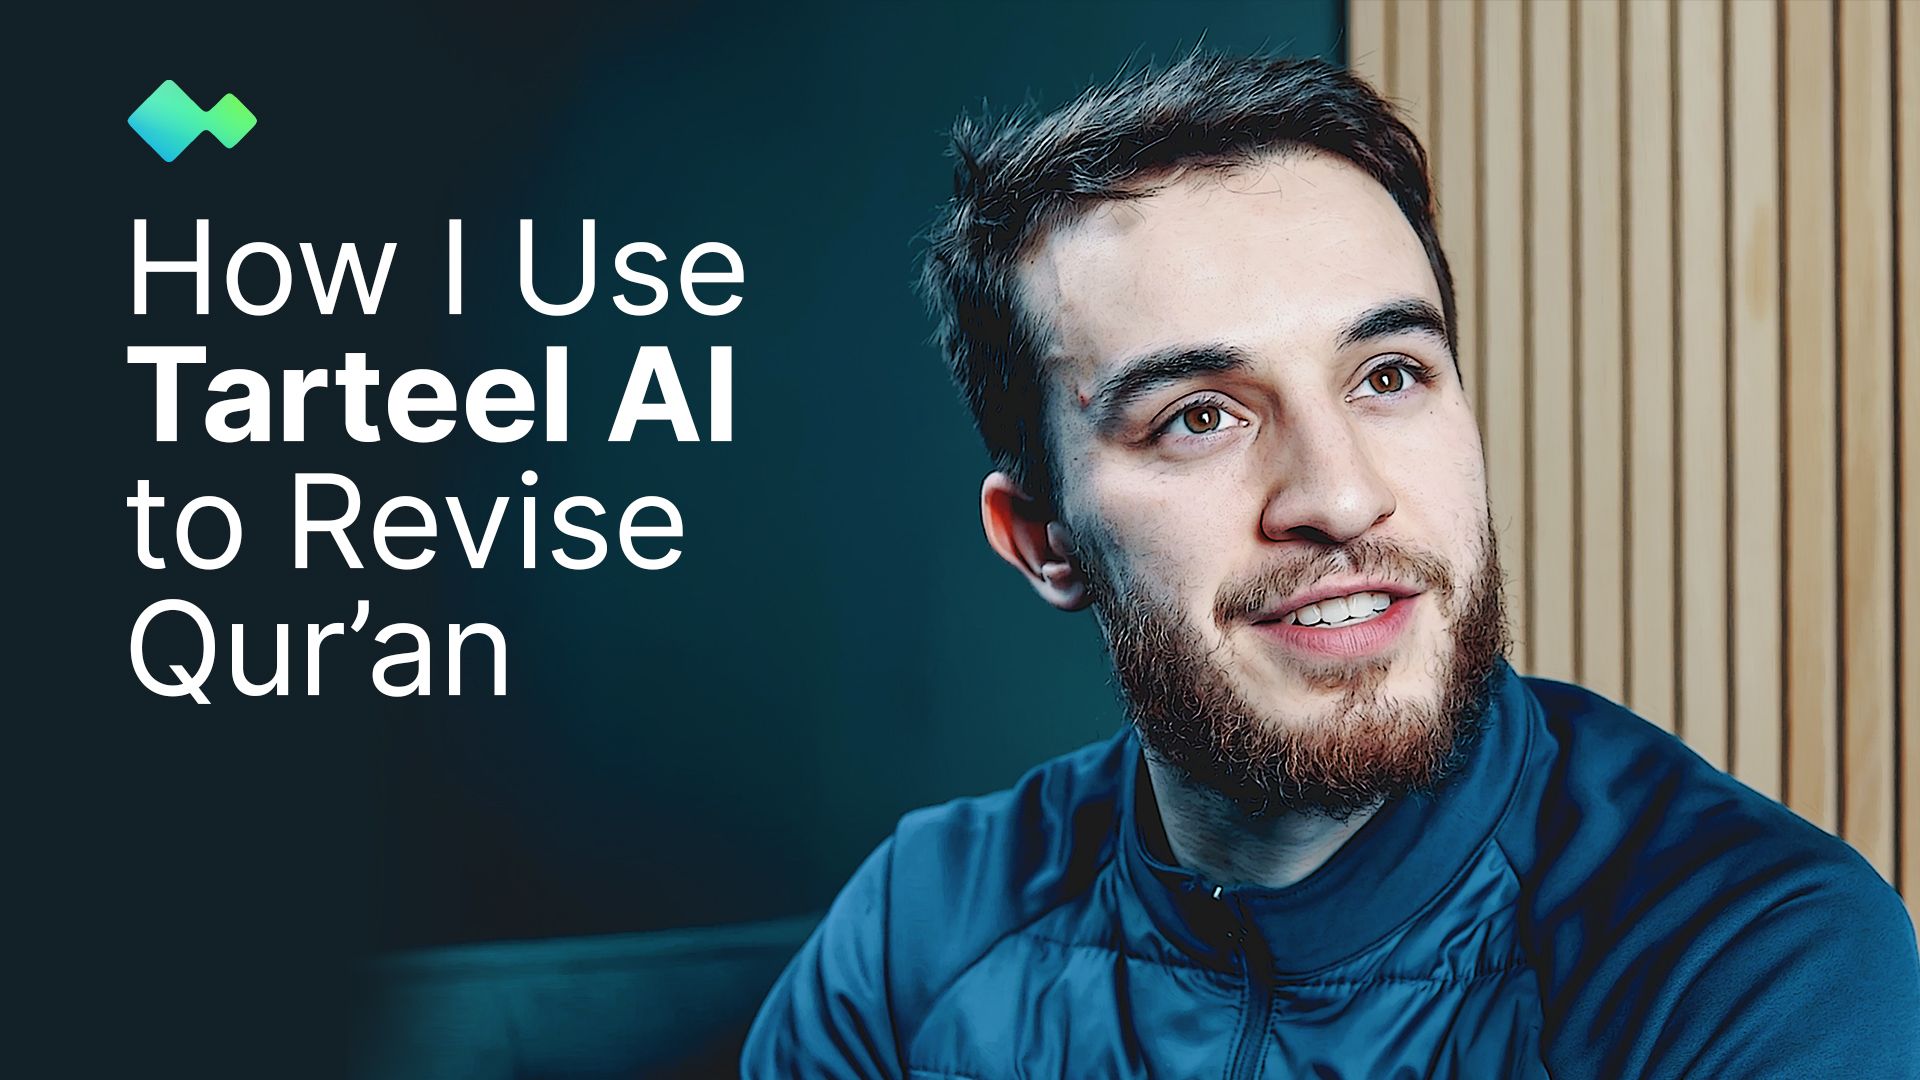 Case Study: How Tarteel AI Helps Me Memorize The Quran